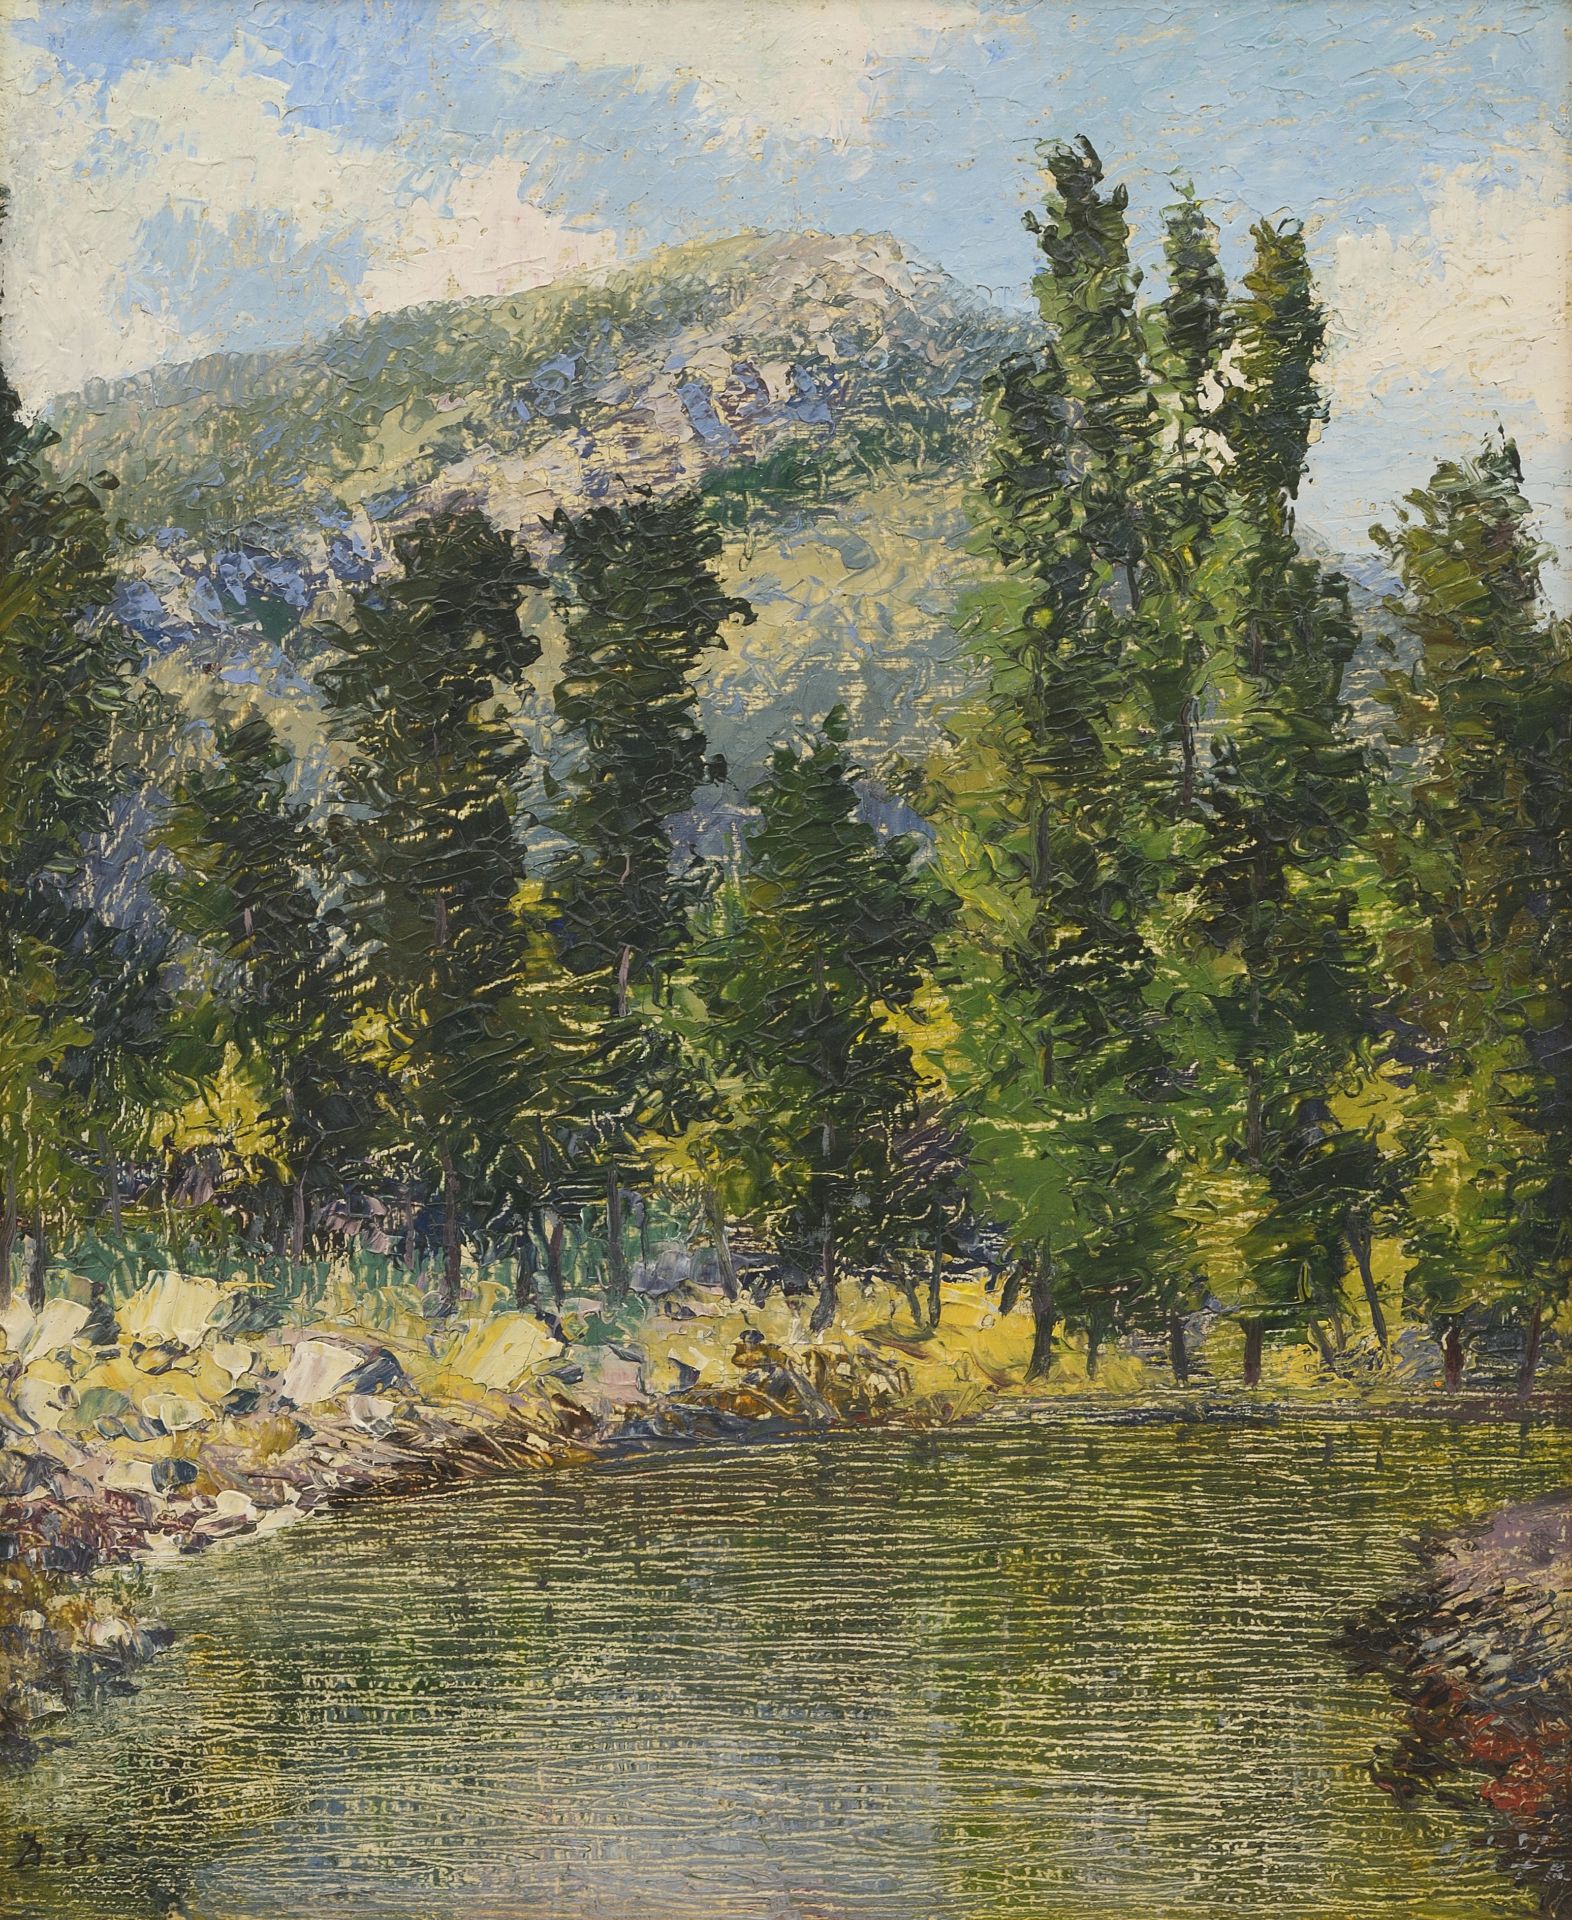 Doncho Savov Zankov /1893-1960/ "Mountain landscape with a river" d.1947